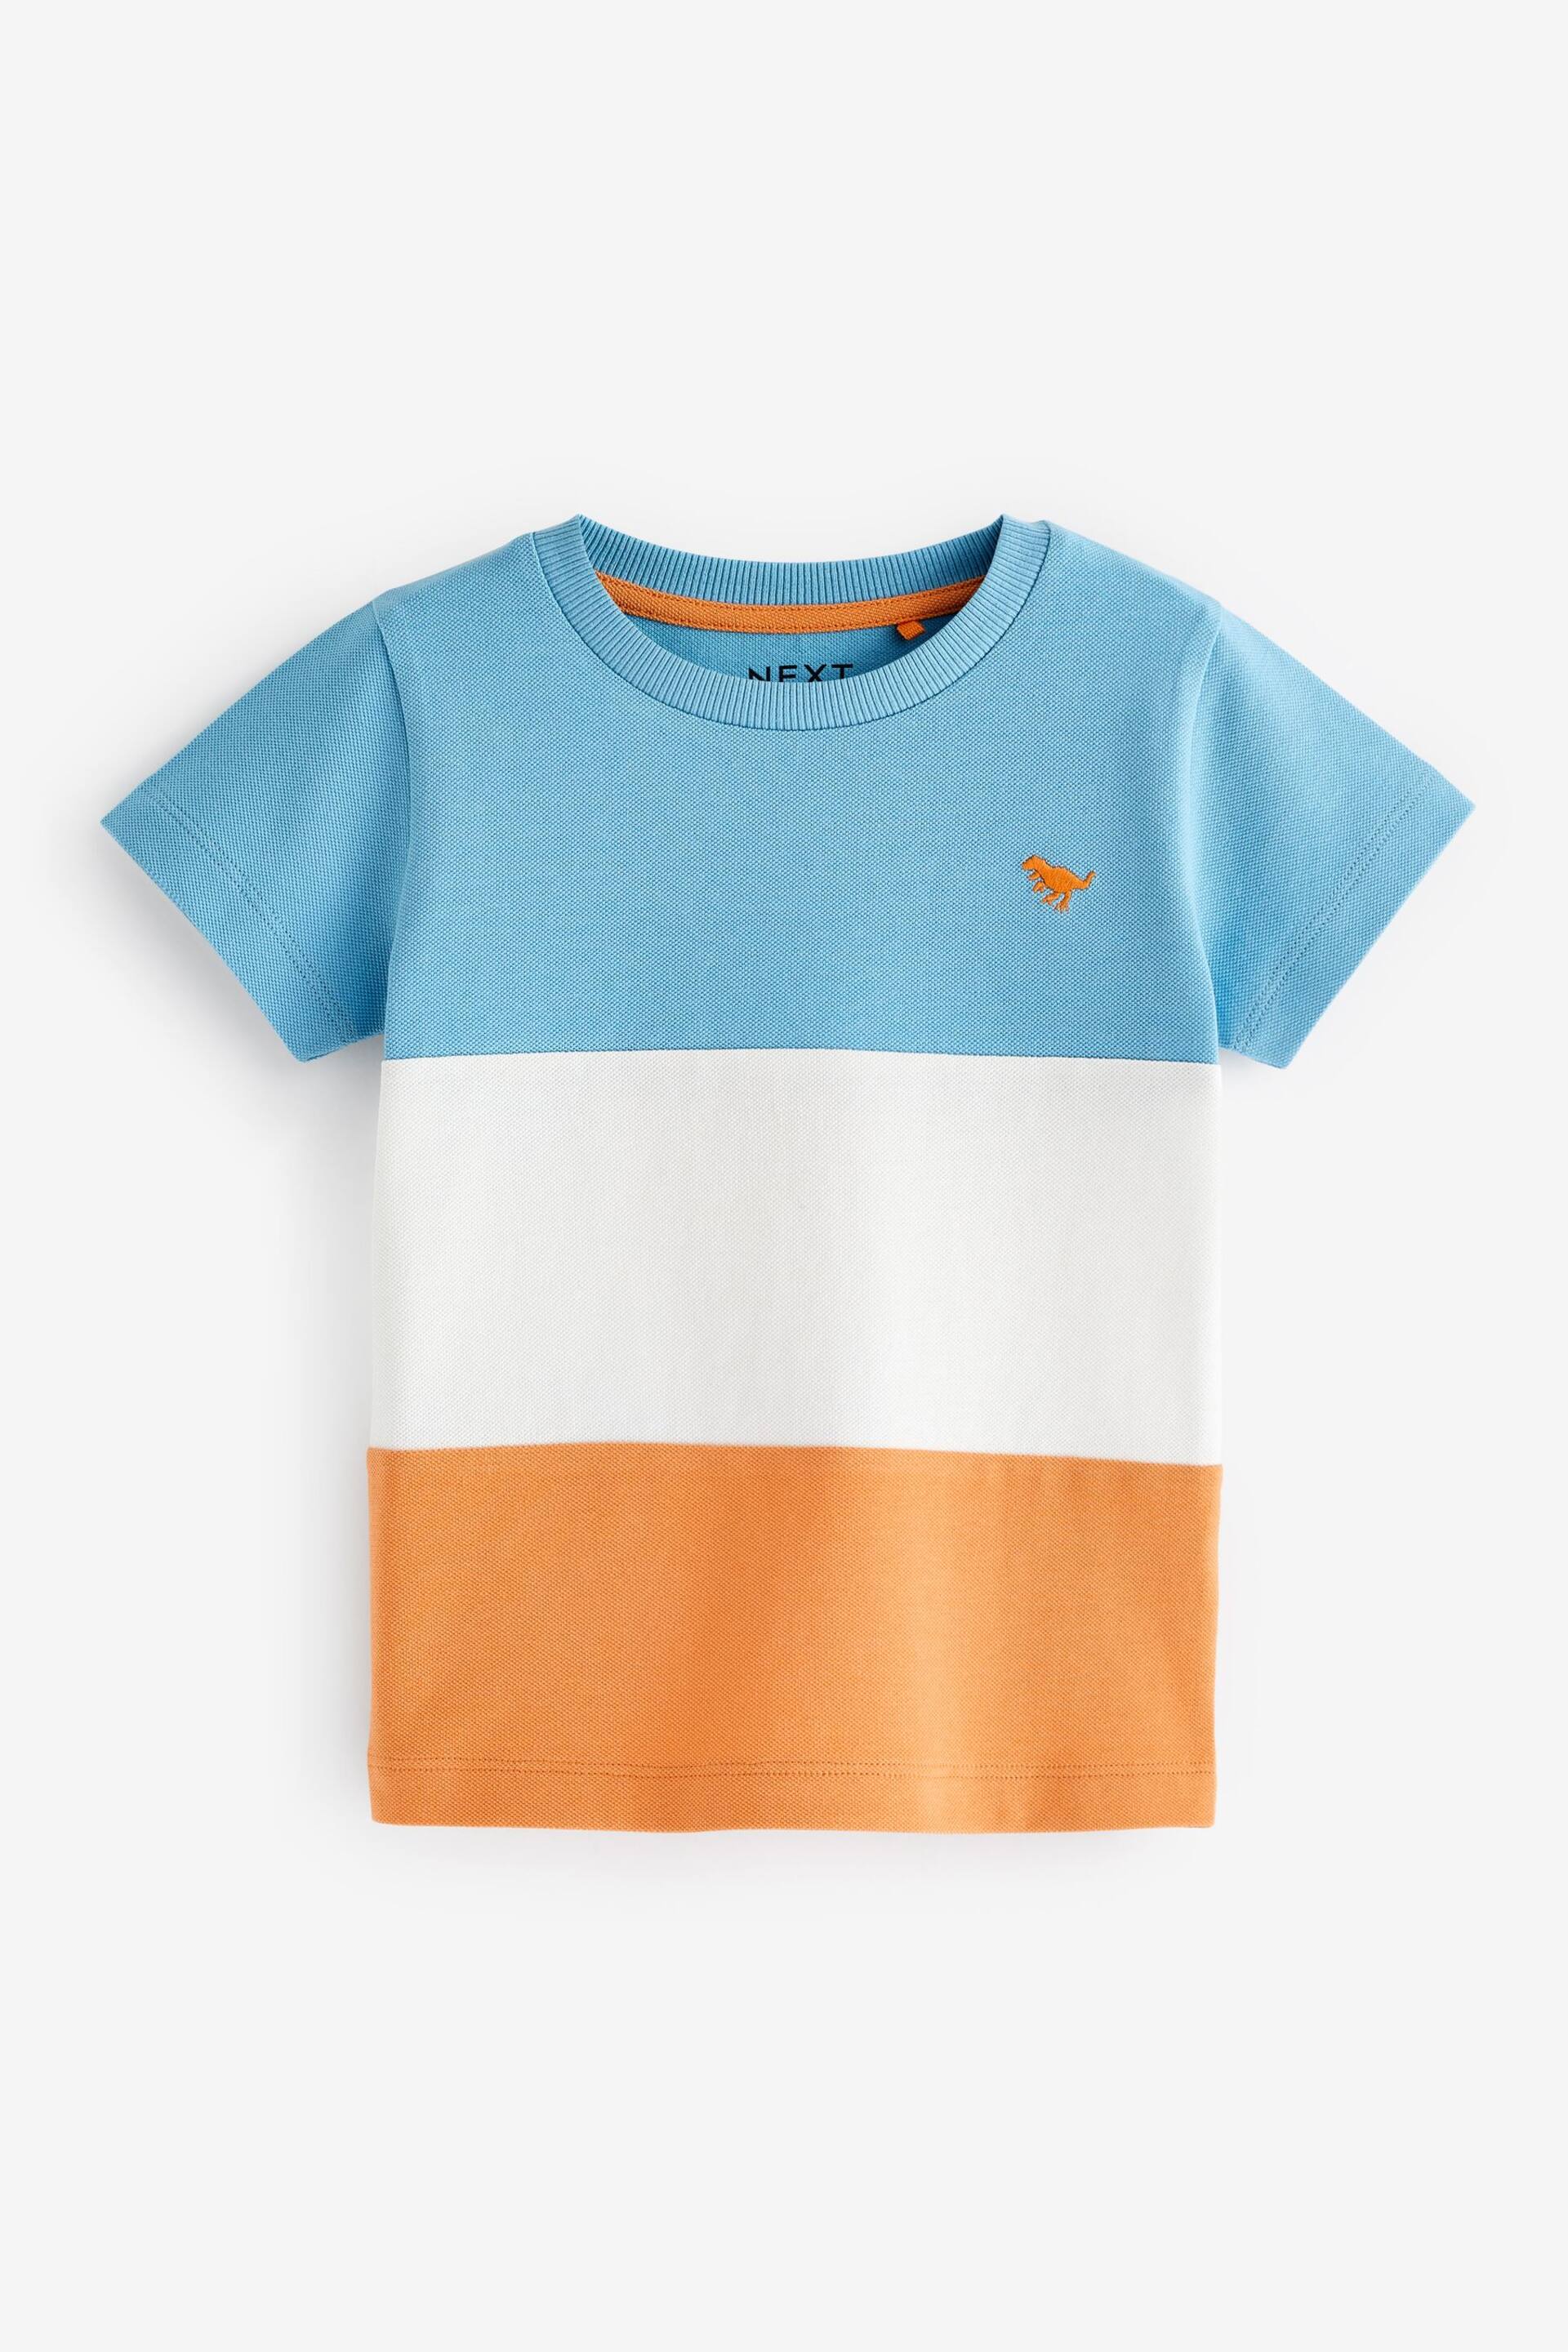 Blue/Orange Short Sleeve Colourblock T-Shirt (3mths-7yrs) - Image 1 of 3